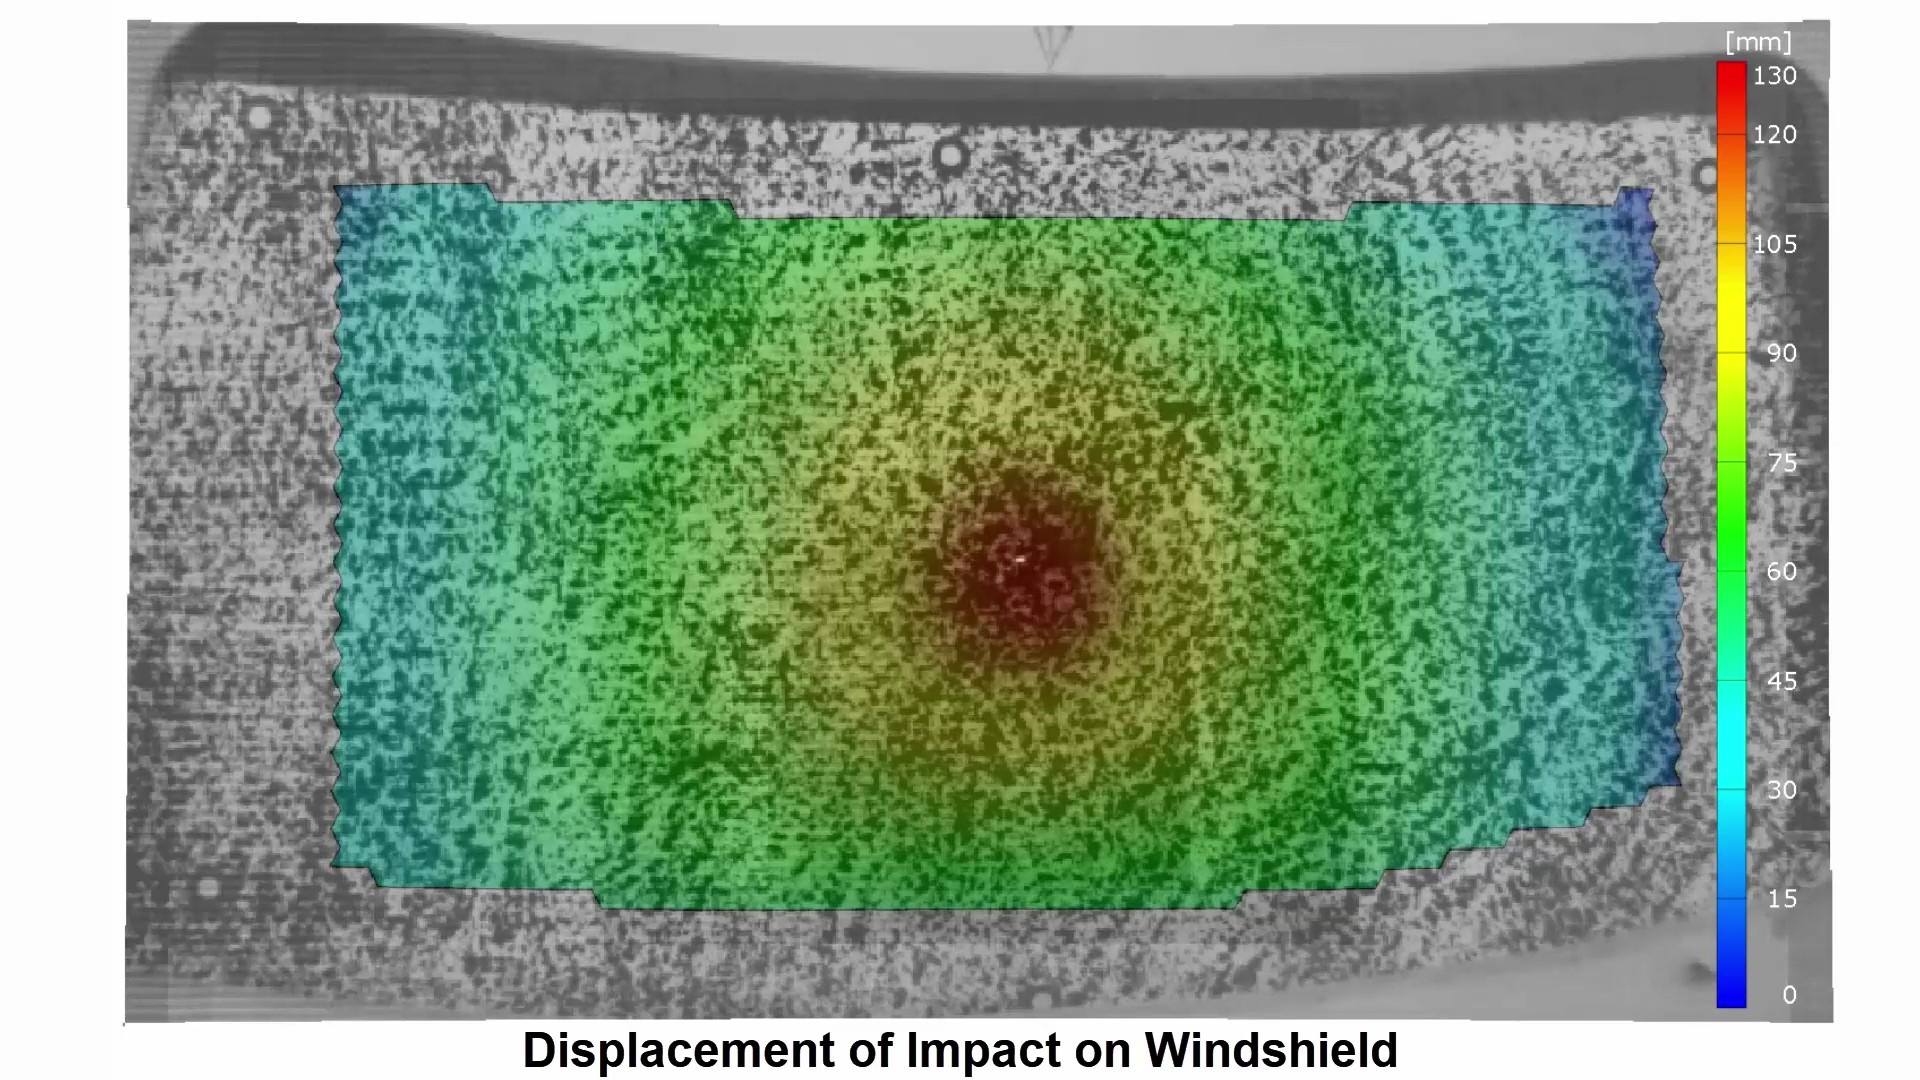 Windshield Impact Test using ARAMIS optical strain system